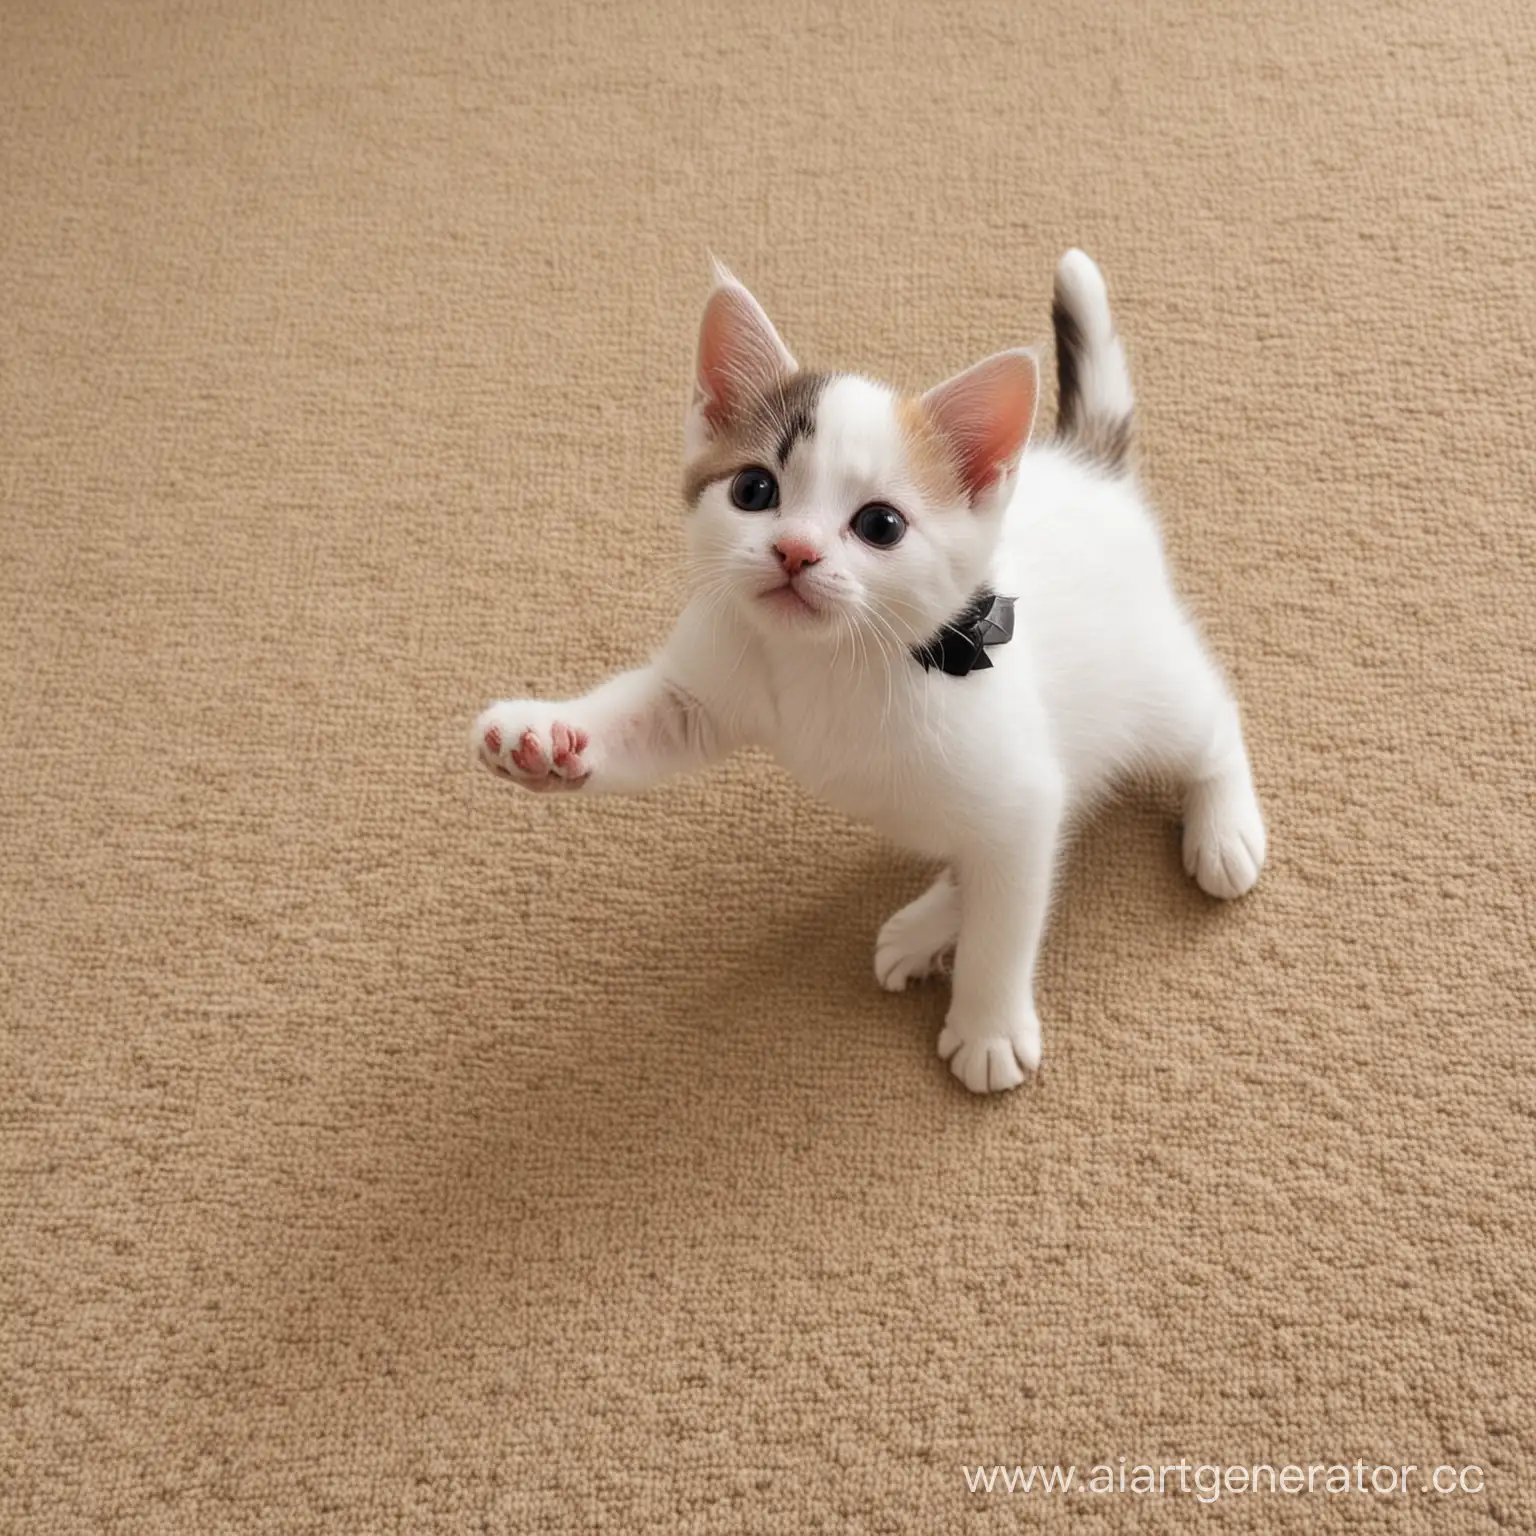 Playful-Kitten-Engaging-in-Adorable-Activities